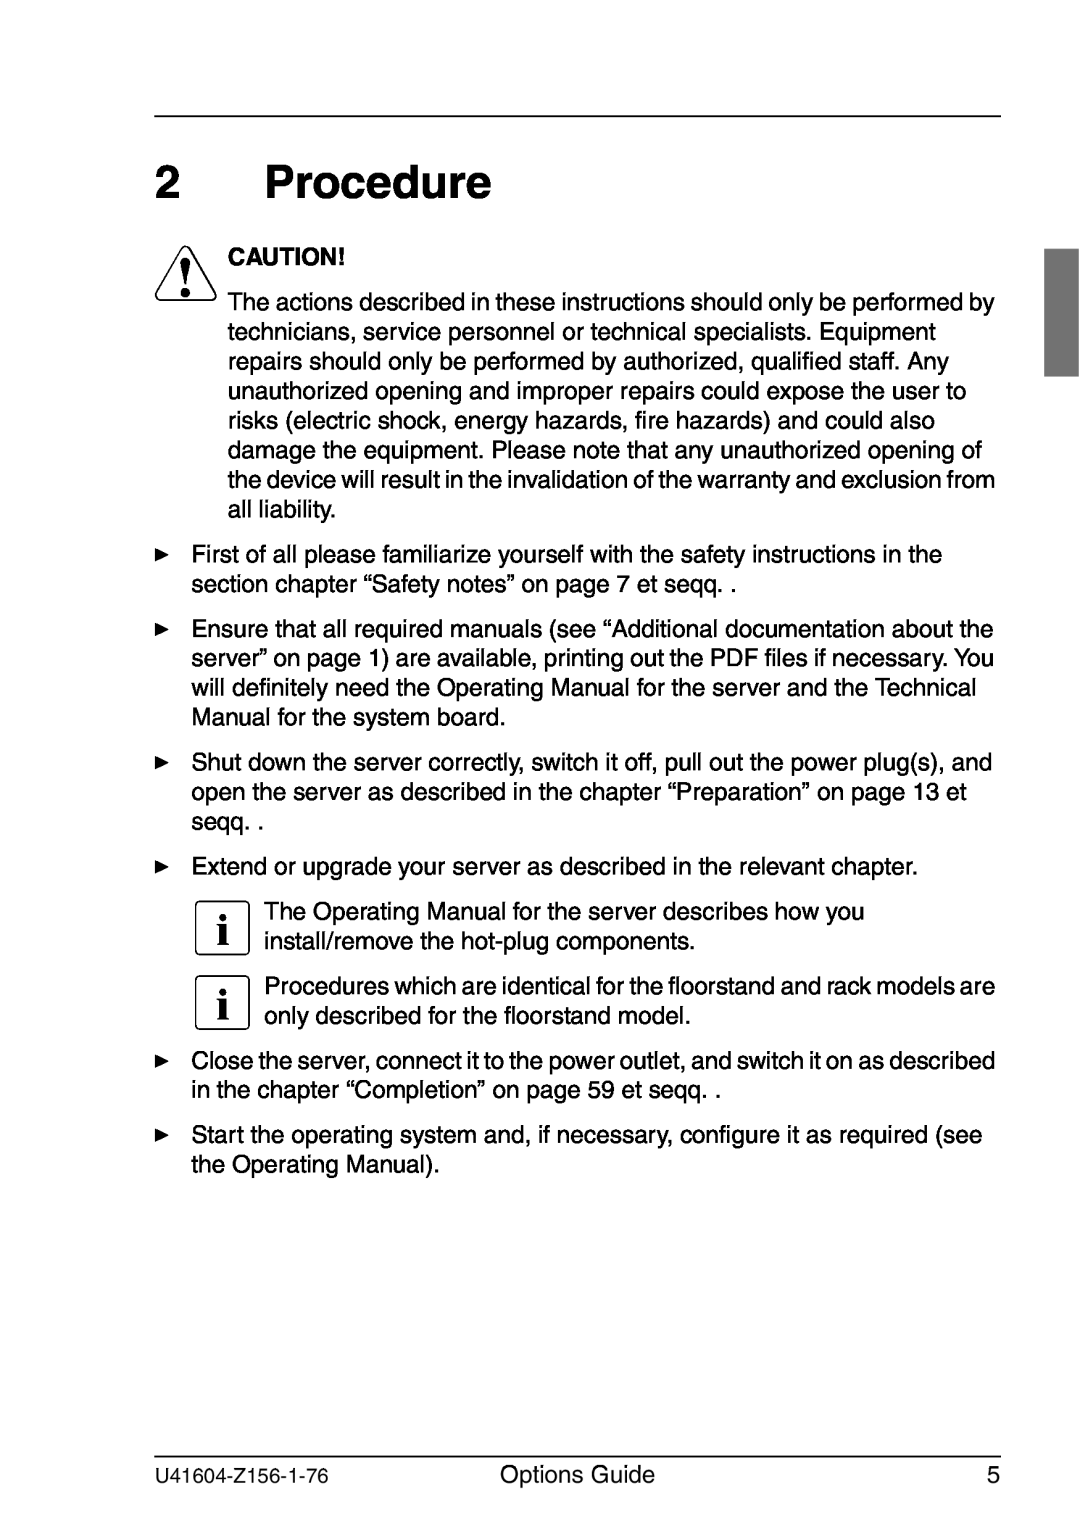 Fujitsu TX150 S3 manual Procedure, V Caution 